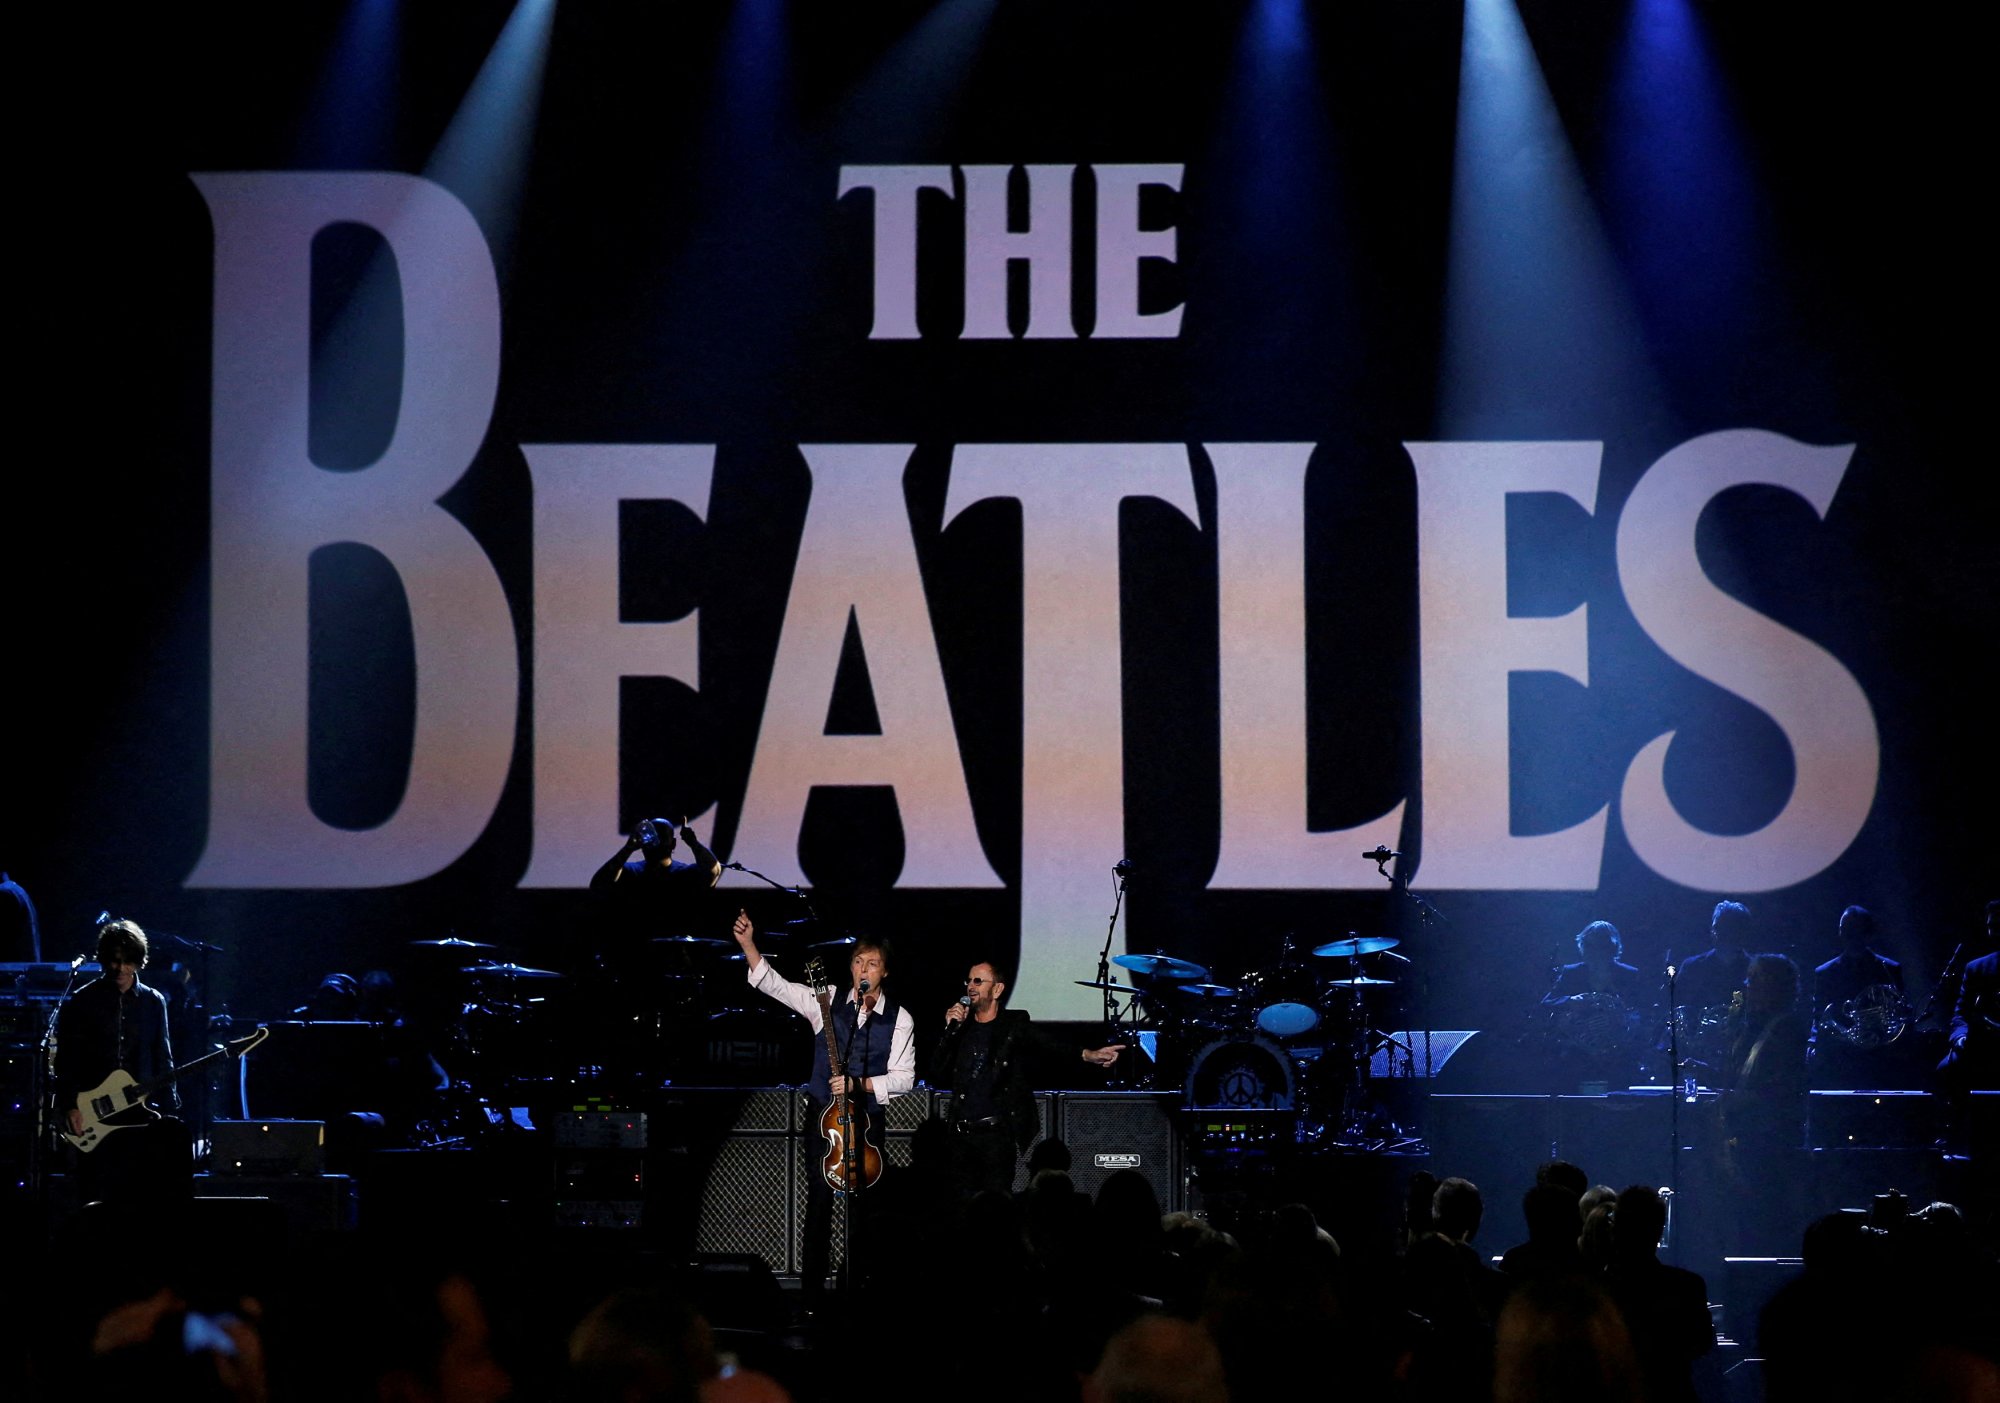 The Beatles: Στην κορυφή των μουσικών charts, για πρώτη φορά μετά από 54 χρόνια